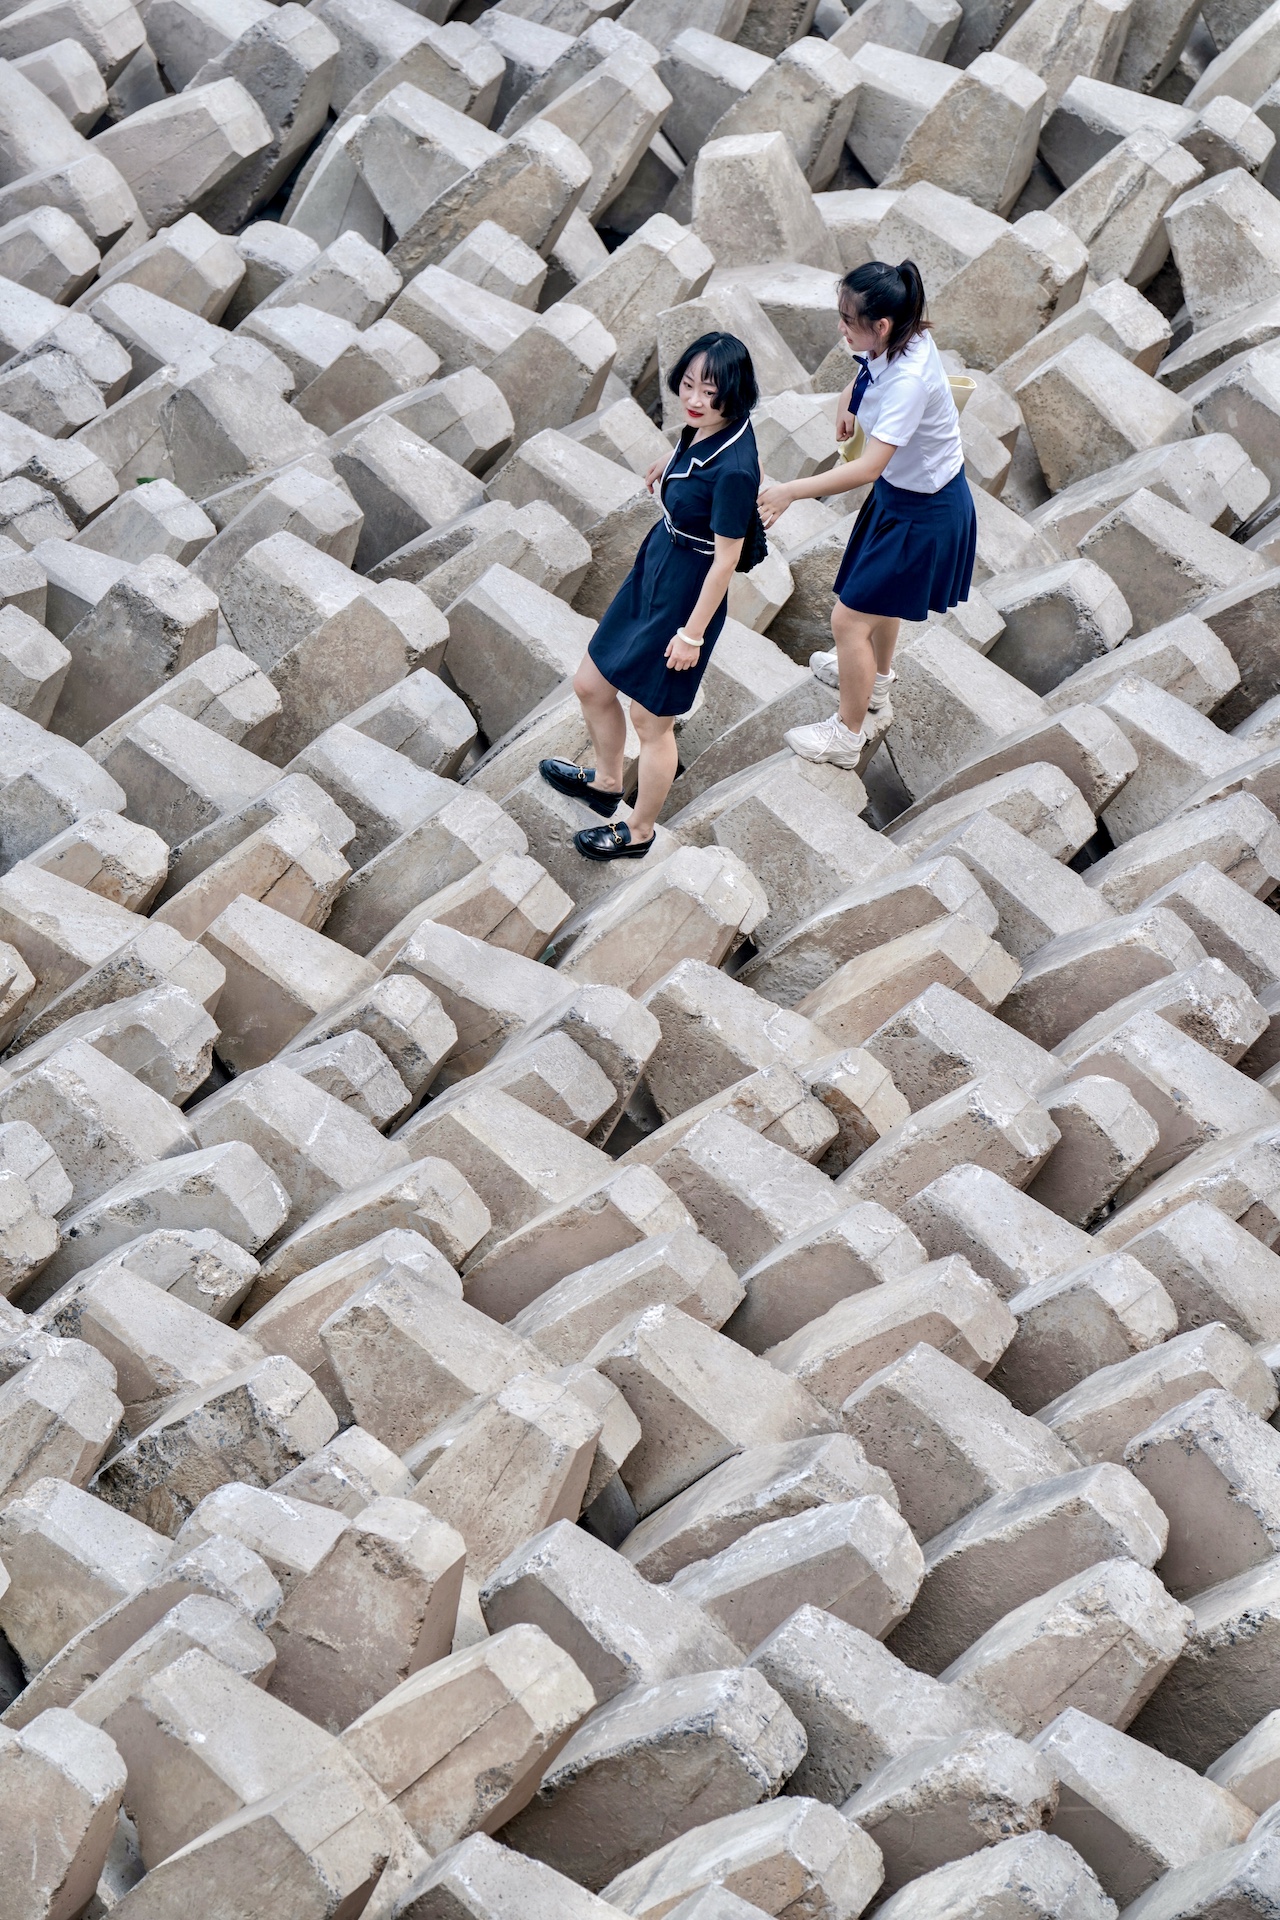 china influencers drought breakwater blocks